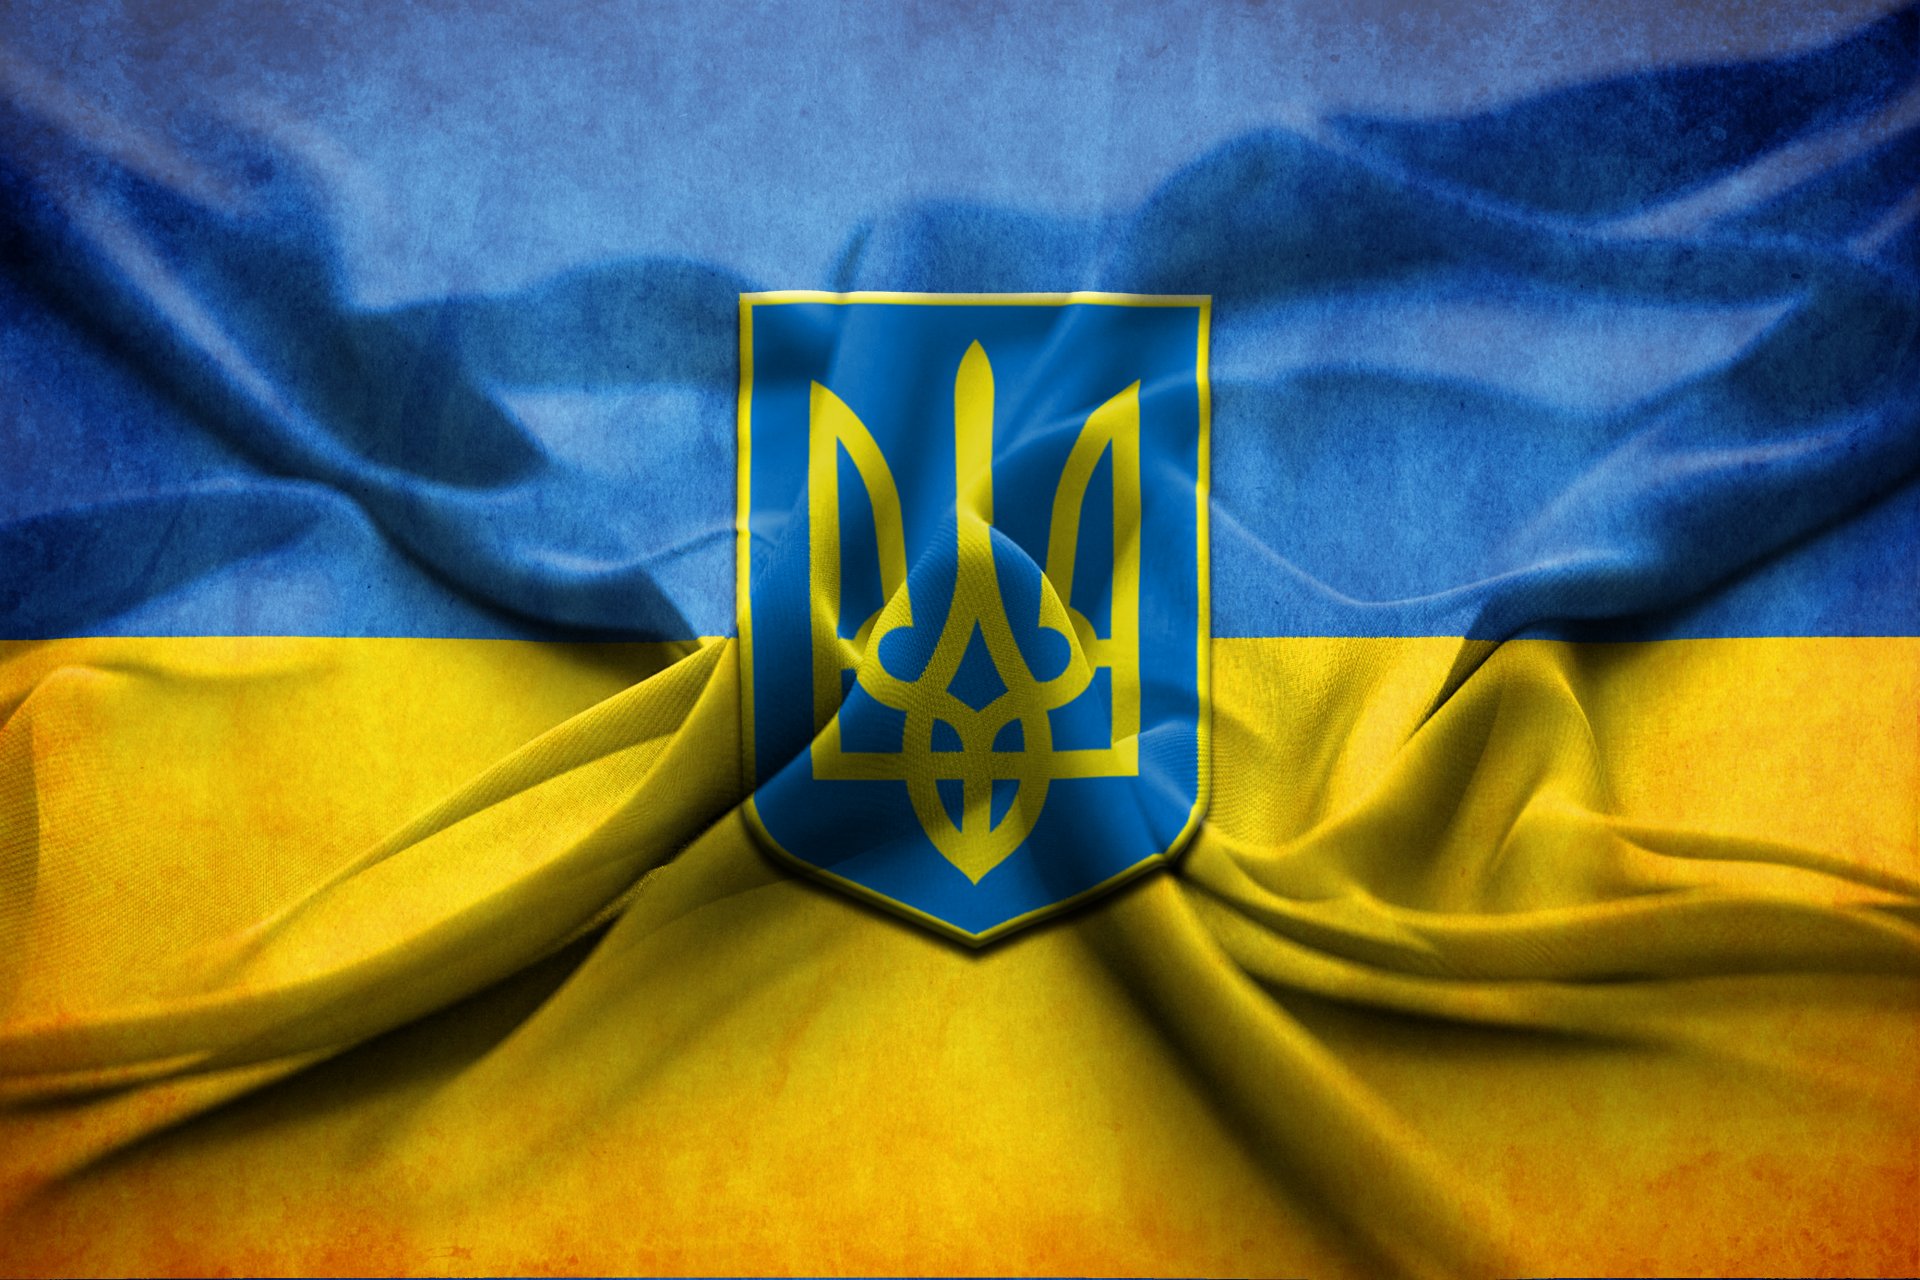 Escudo de ucrania significado